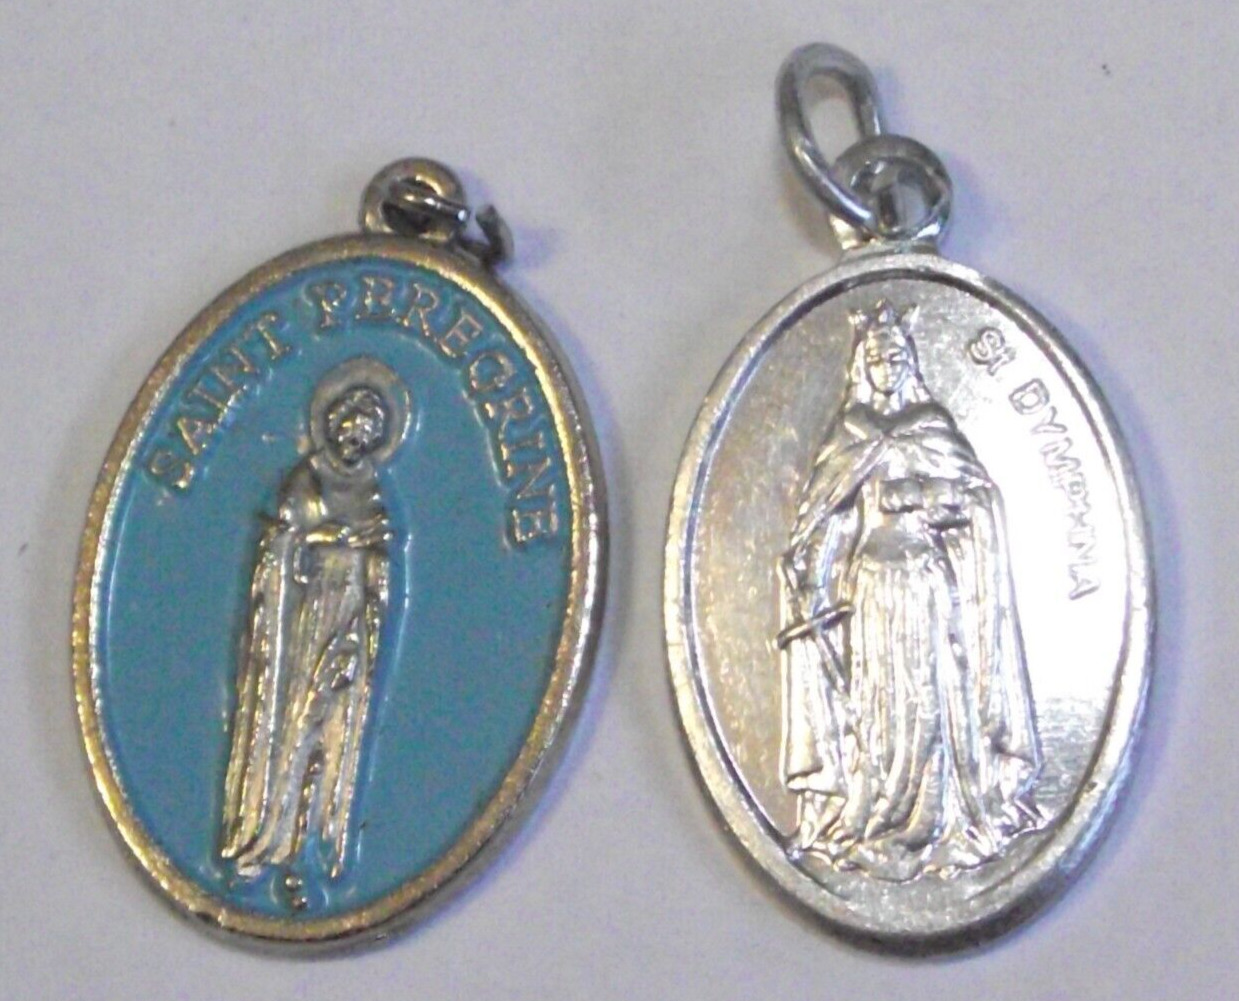 Vtg religious pendant medal St Peregrine Dymphna patron mental illness & cancer